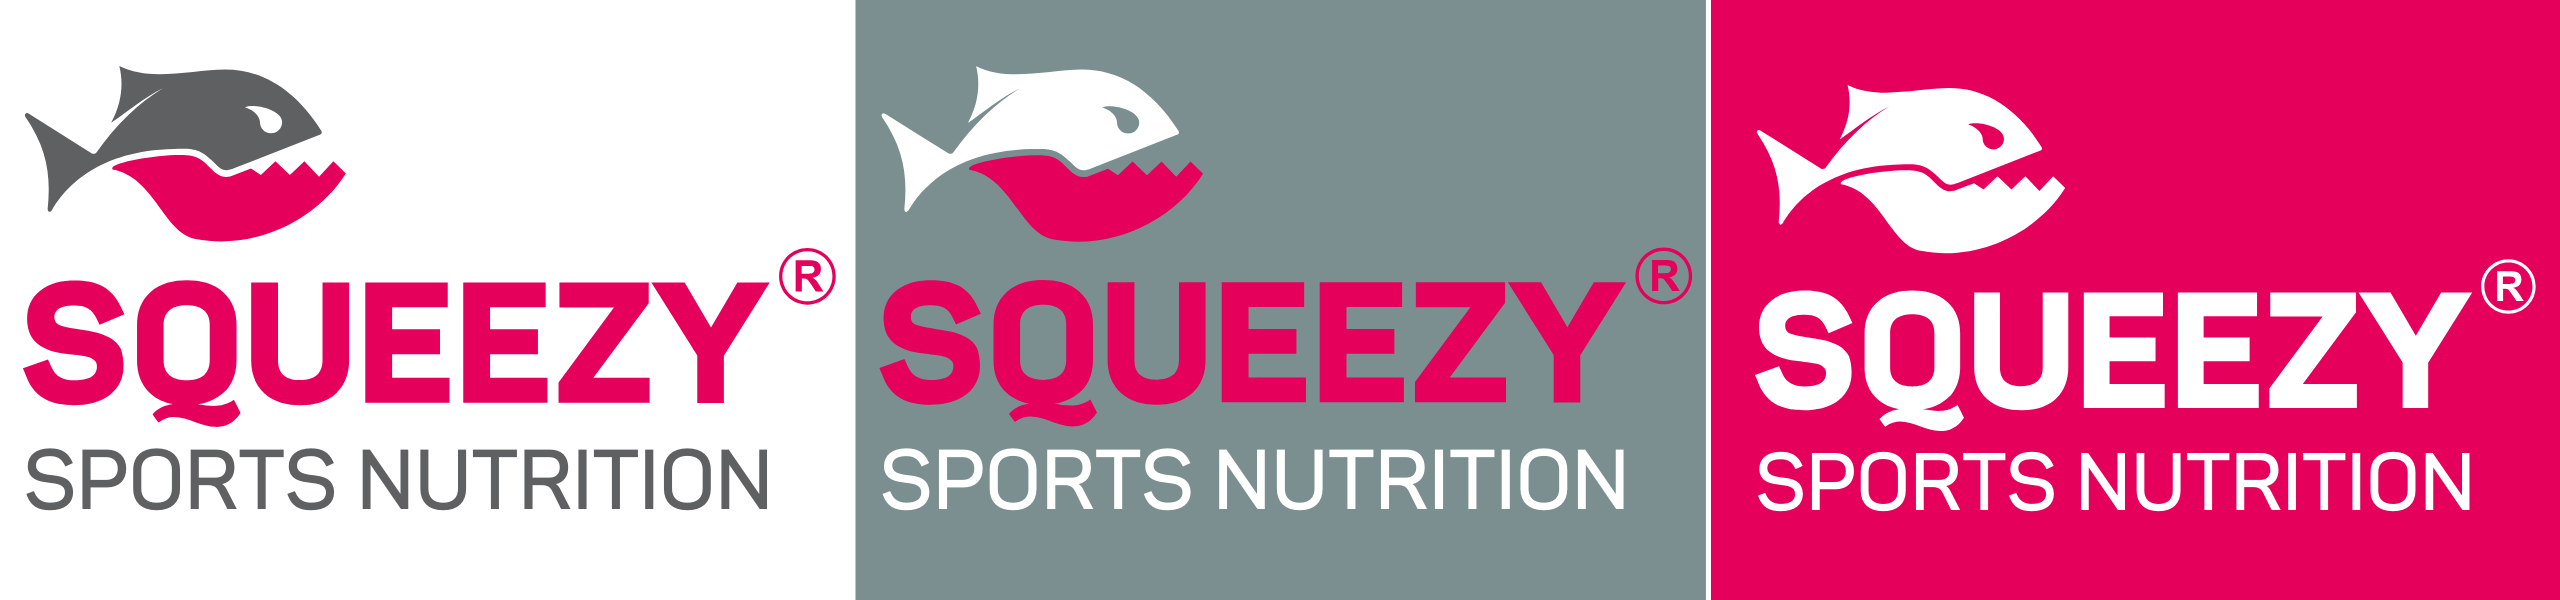 Squeezy Logo Varianten 2021